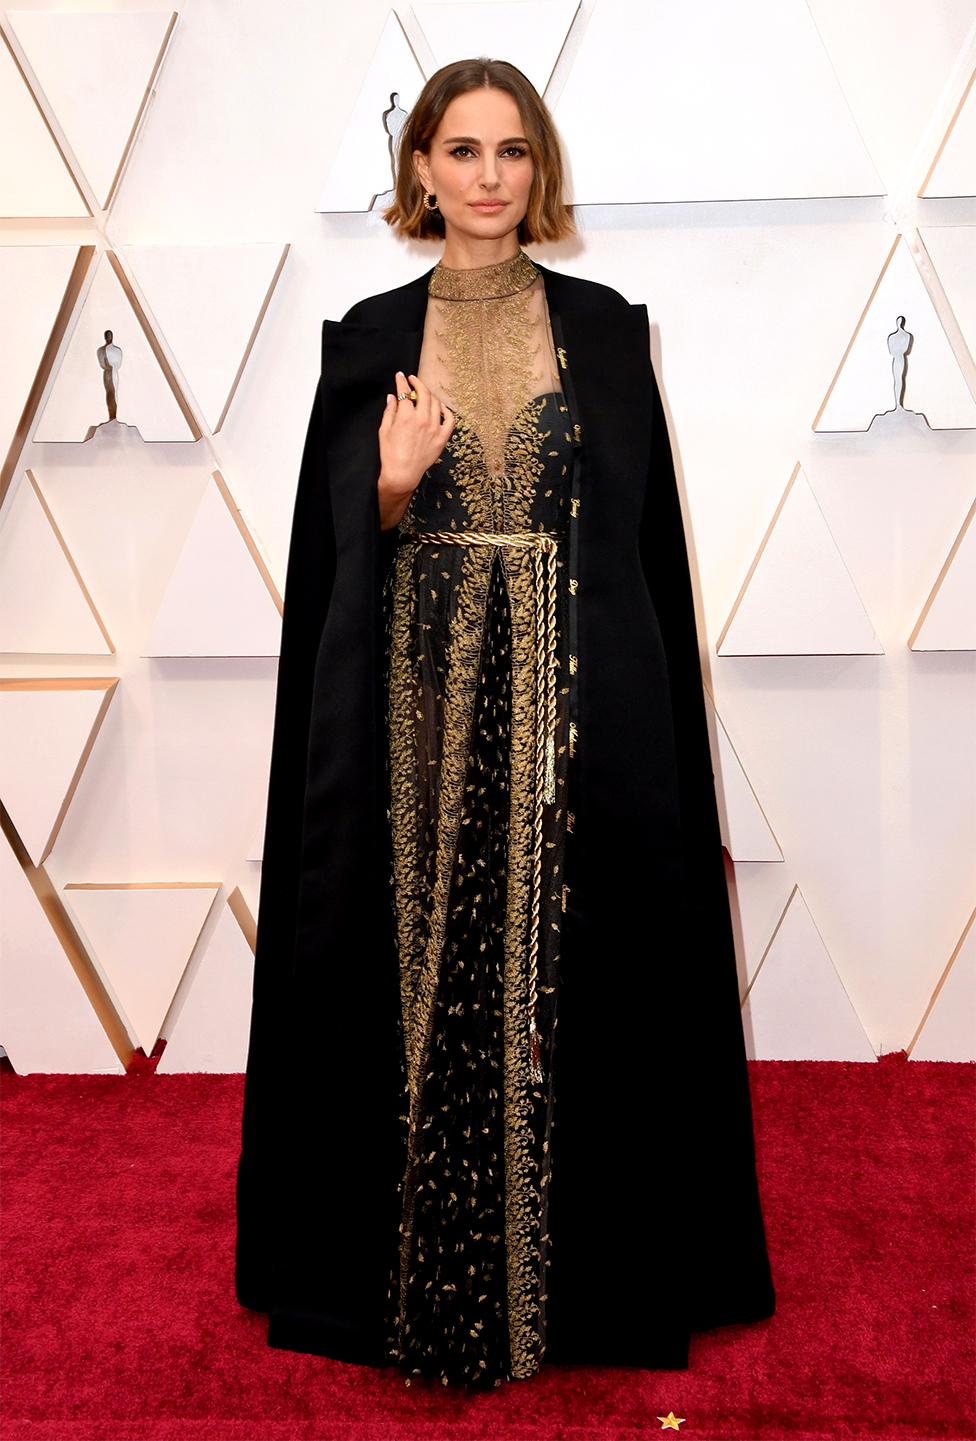 Natalie Portman on the red carpet